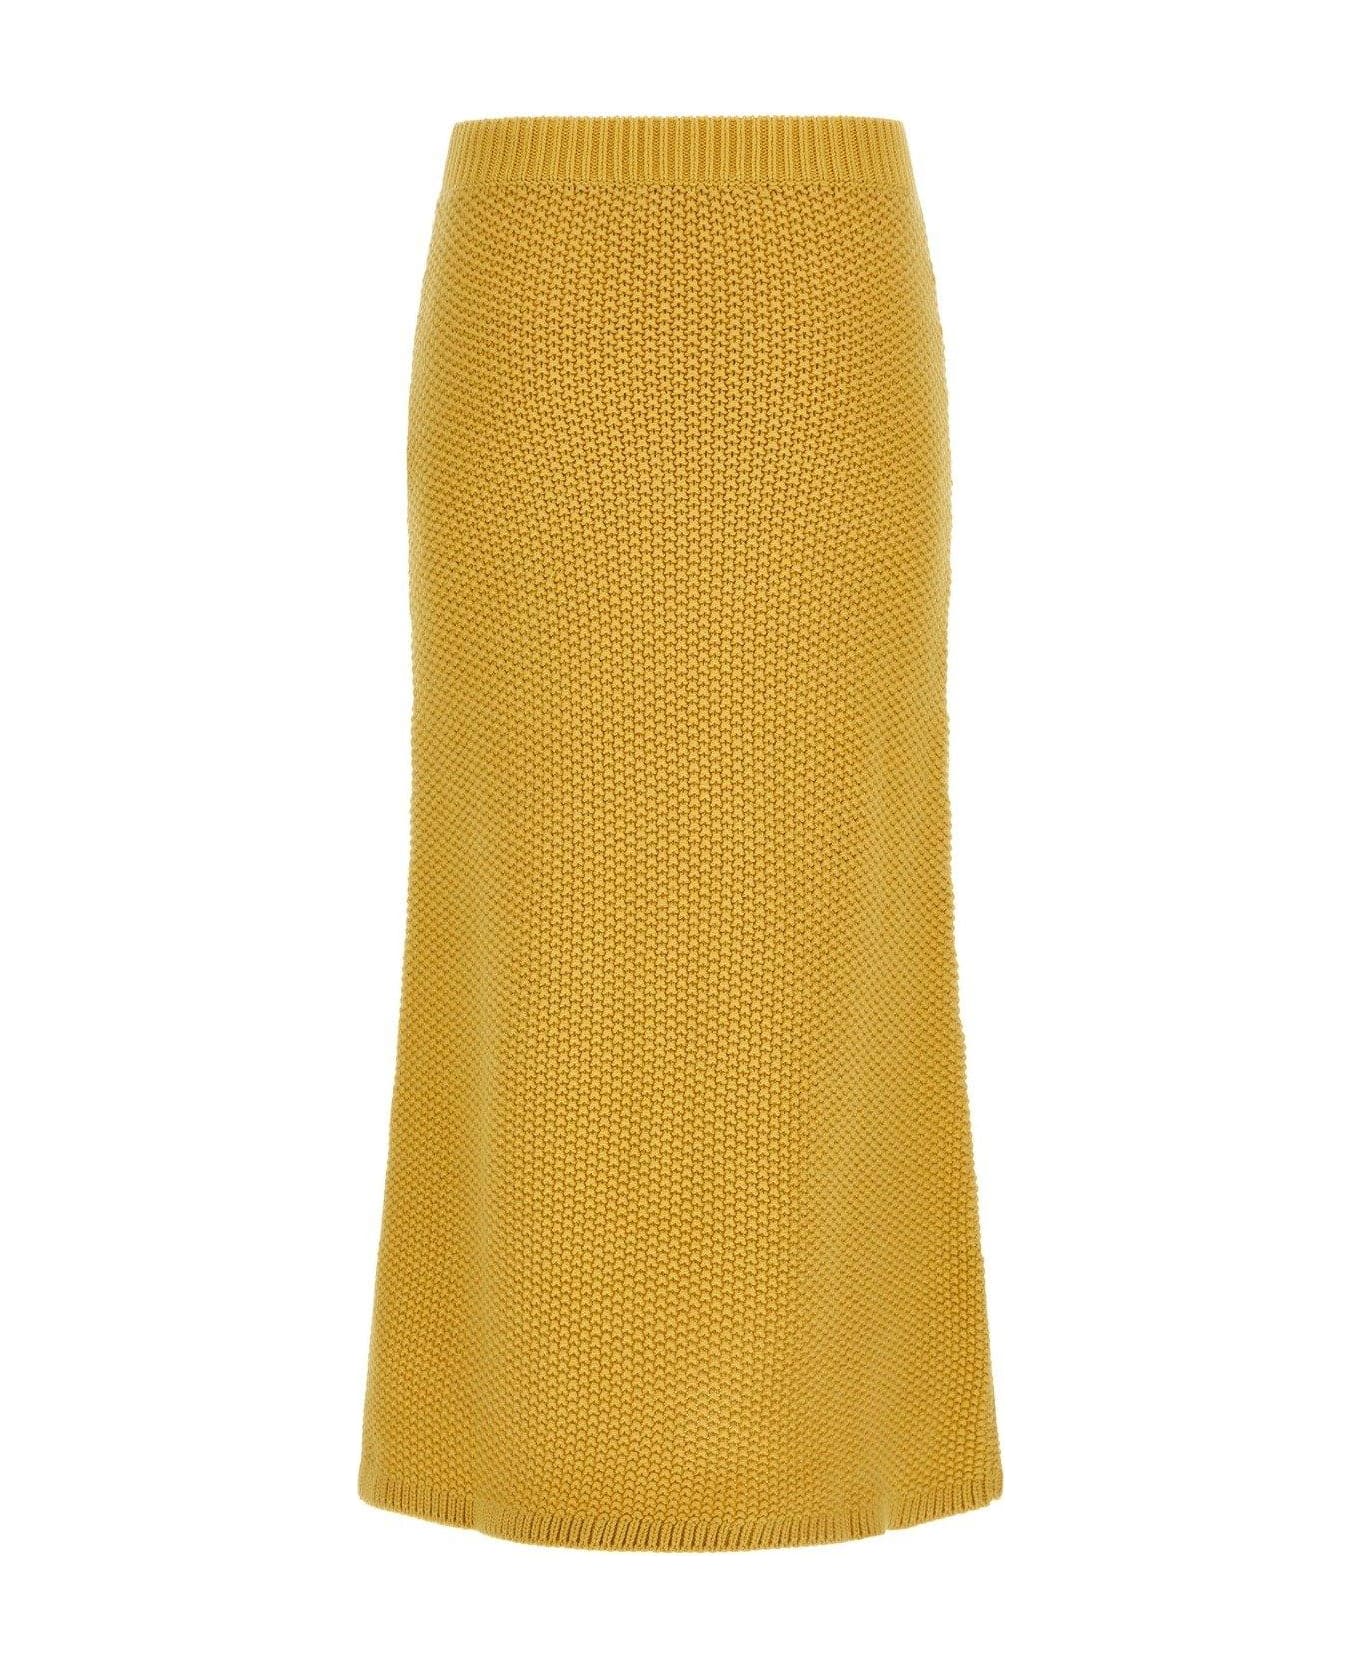 Chloé Flared Maxi Skirt - Joyful yellow